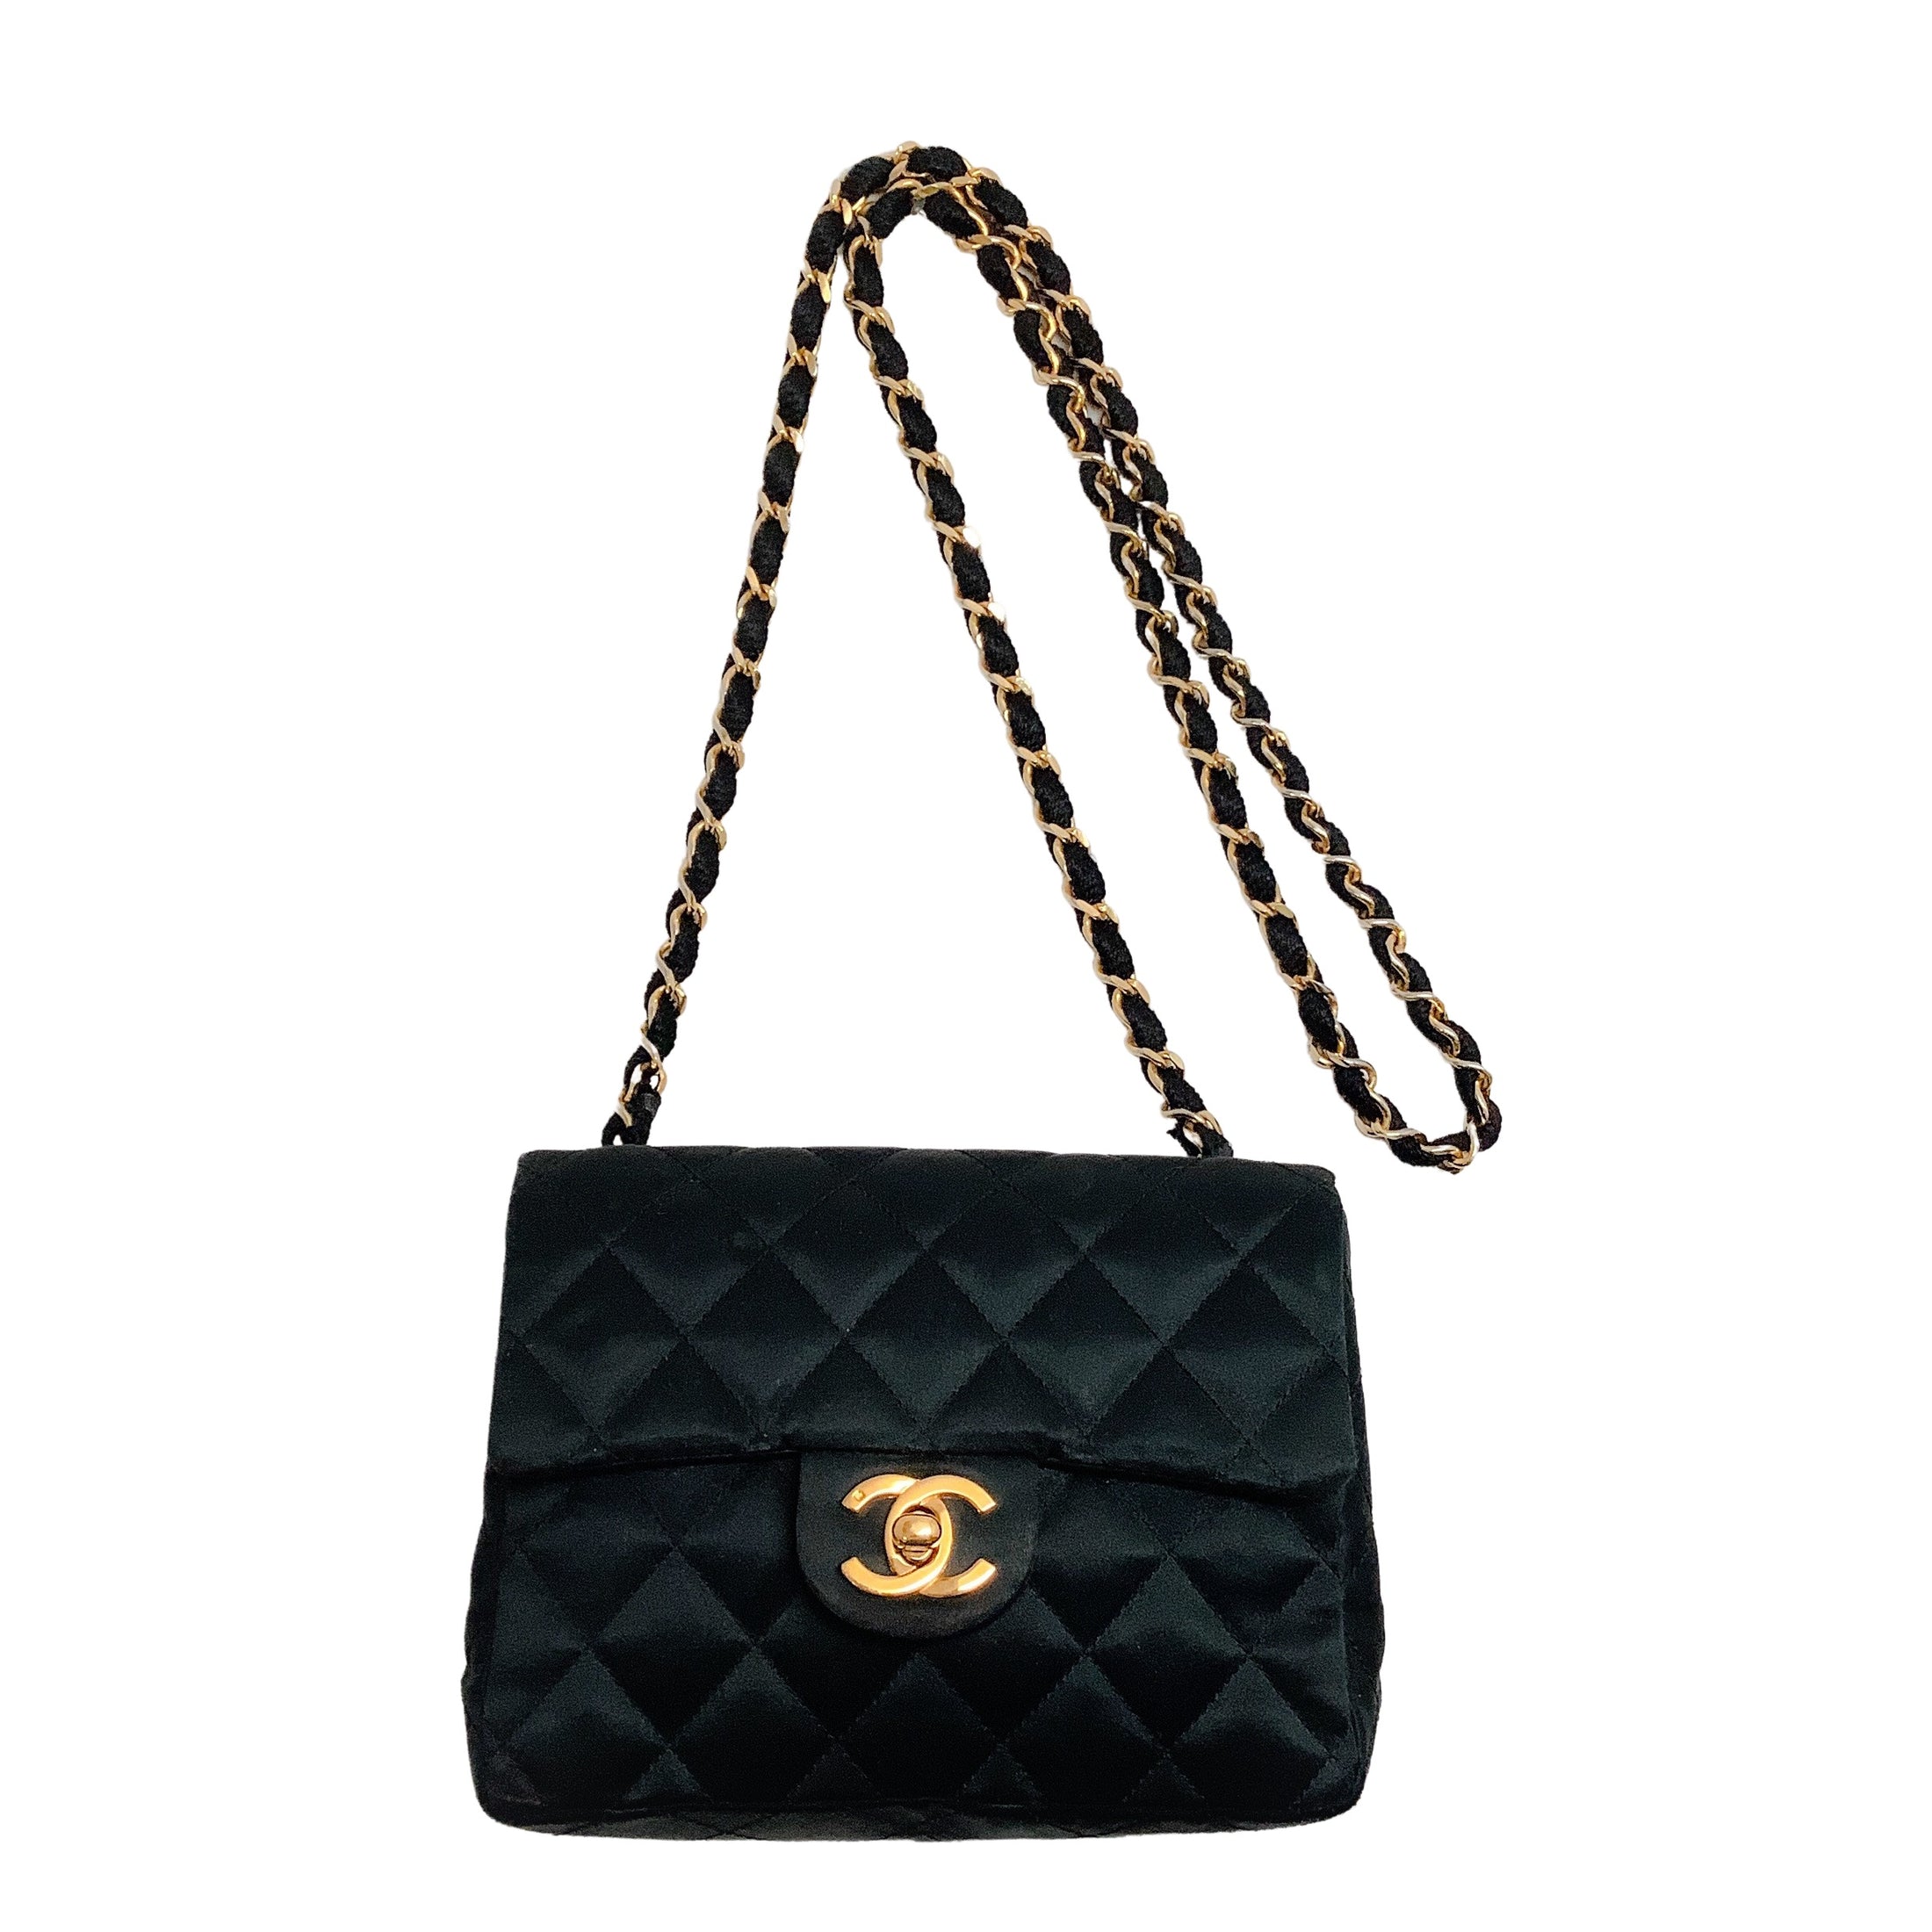 Chanel Vintage Mini Black Satin Cross Body Bag